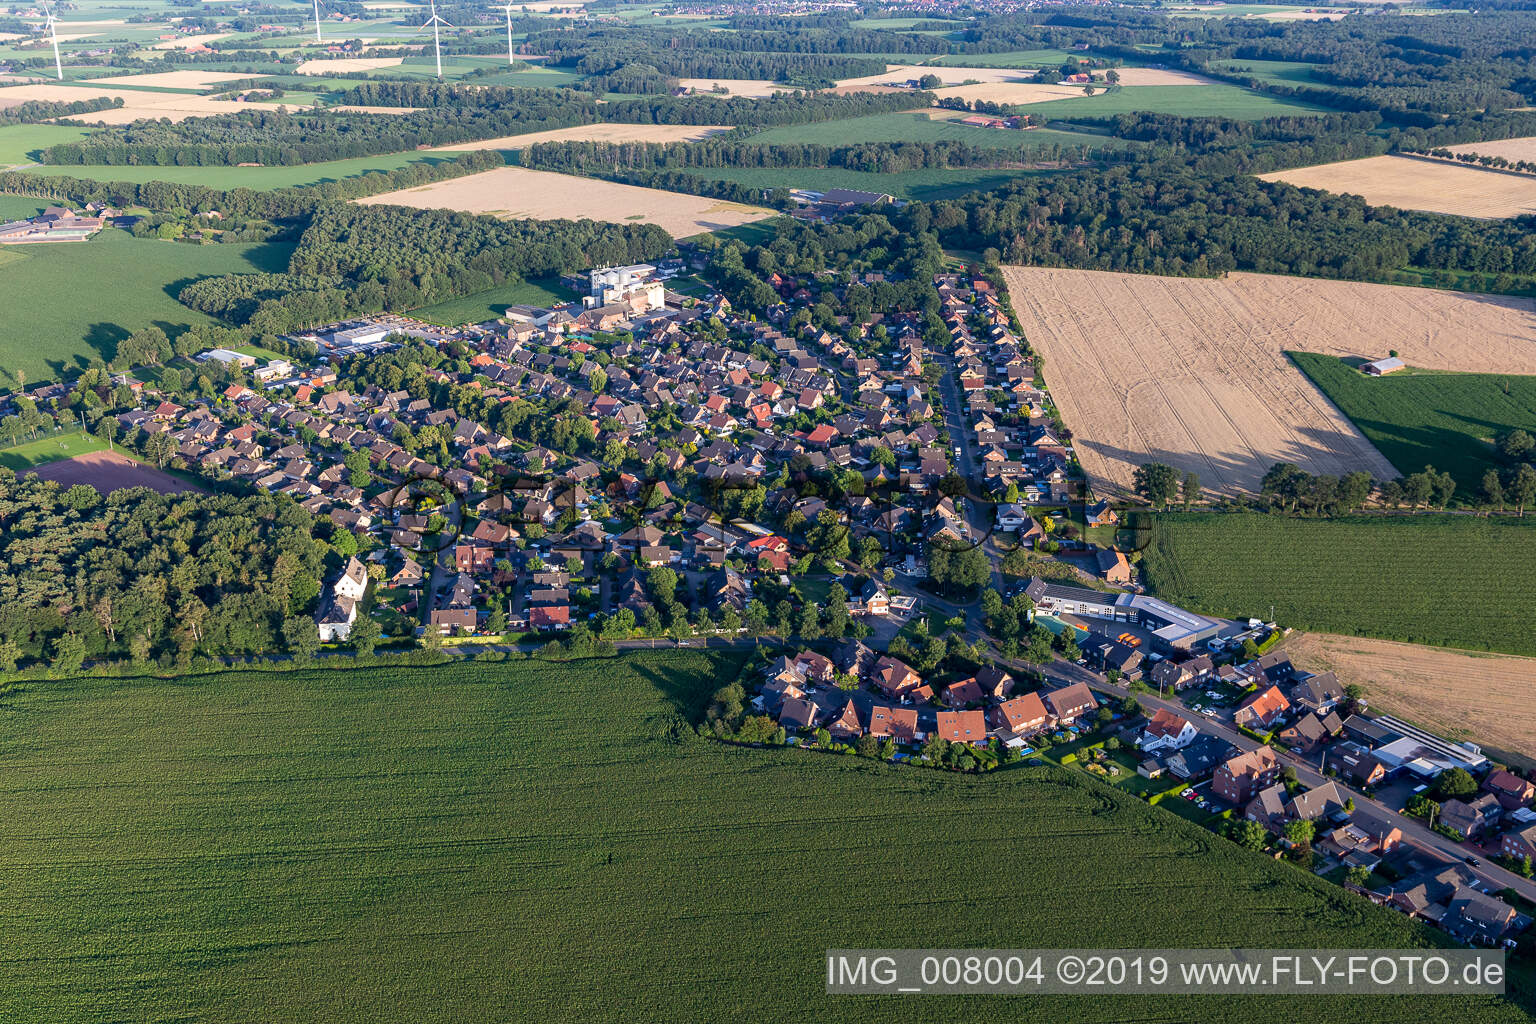 Aerial view of Barlo in the state North Rhine-Westphalia, Germany